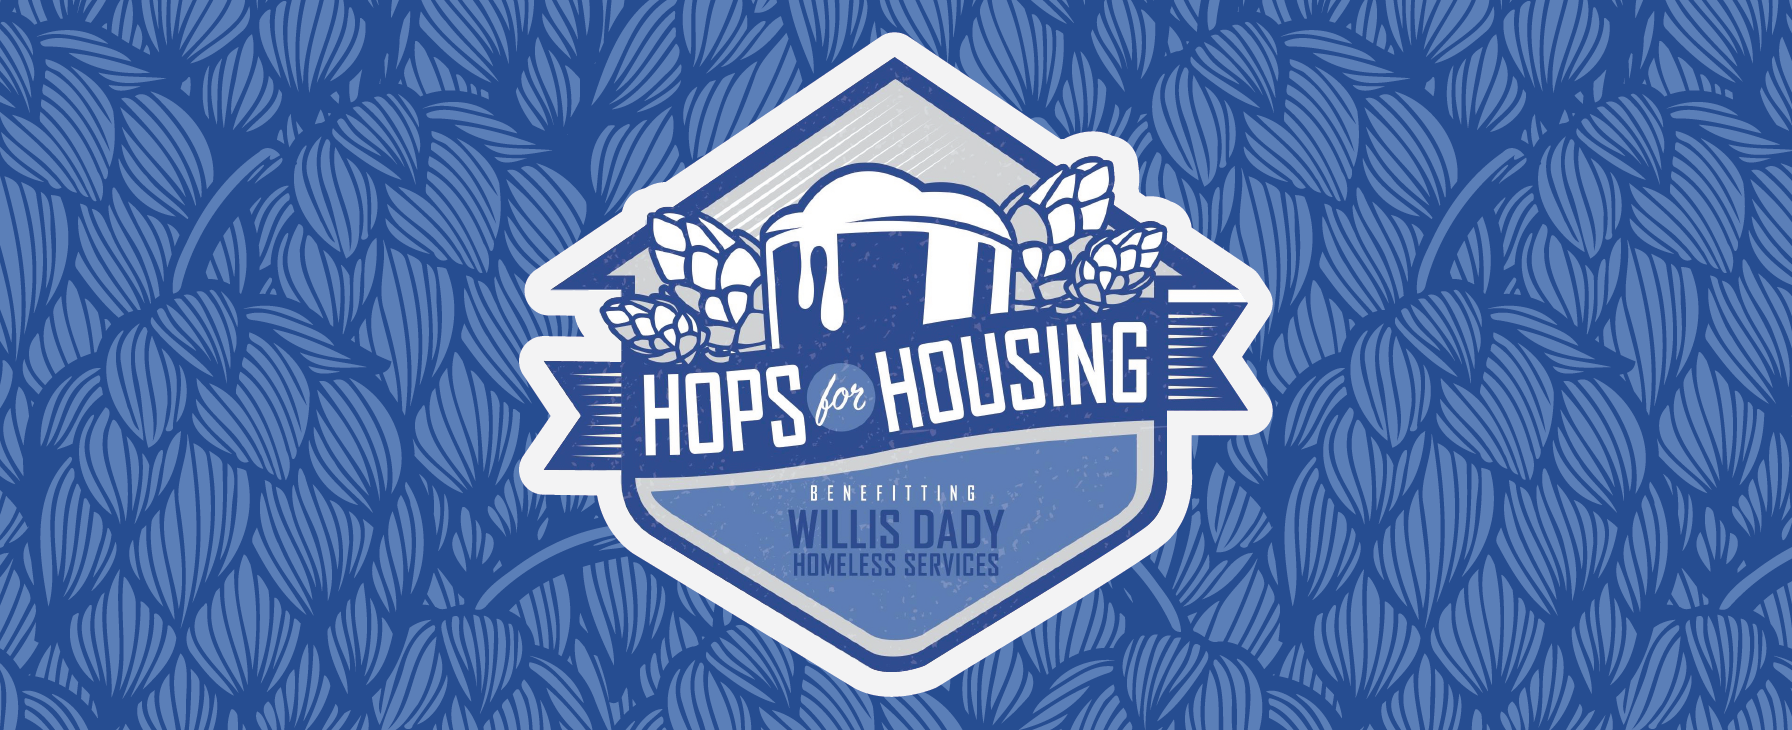 Hops for Housing event logo